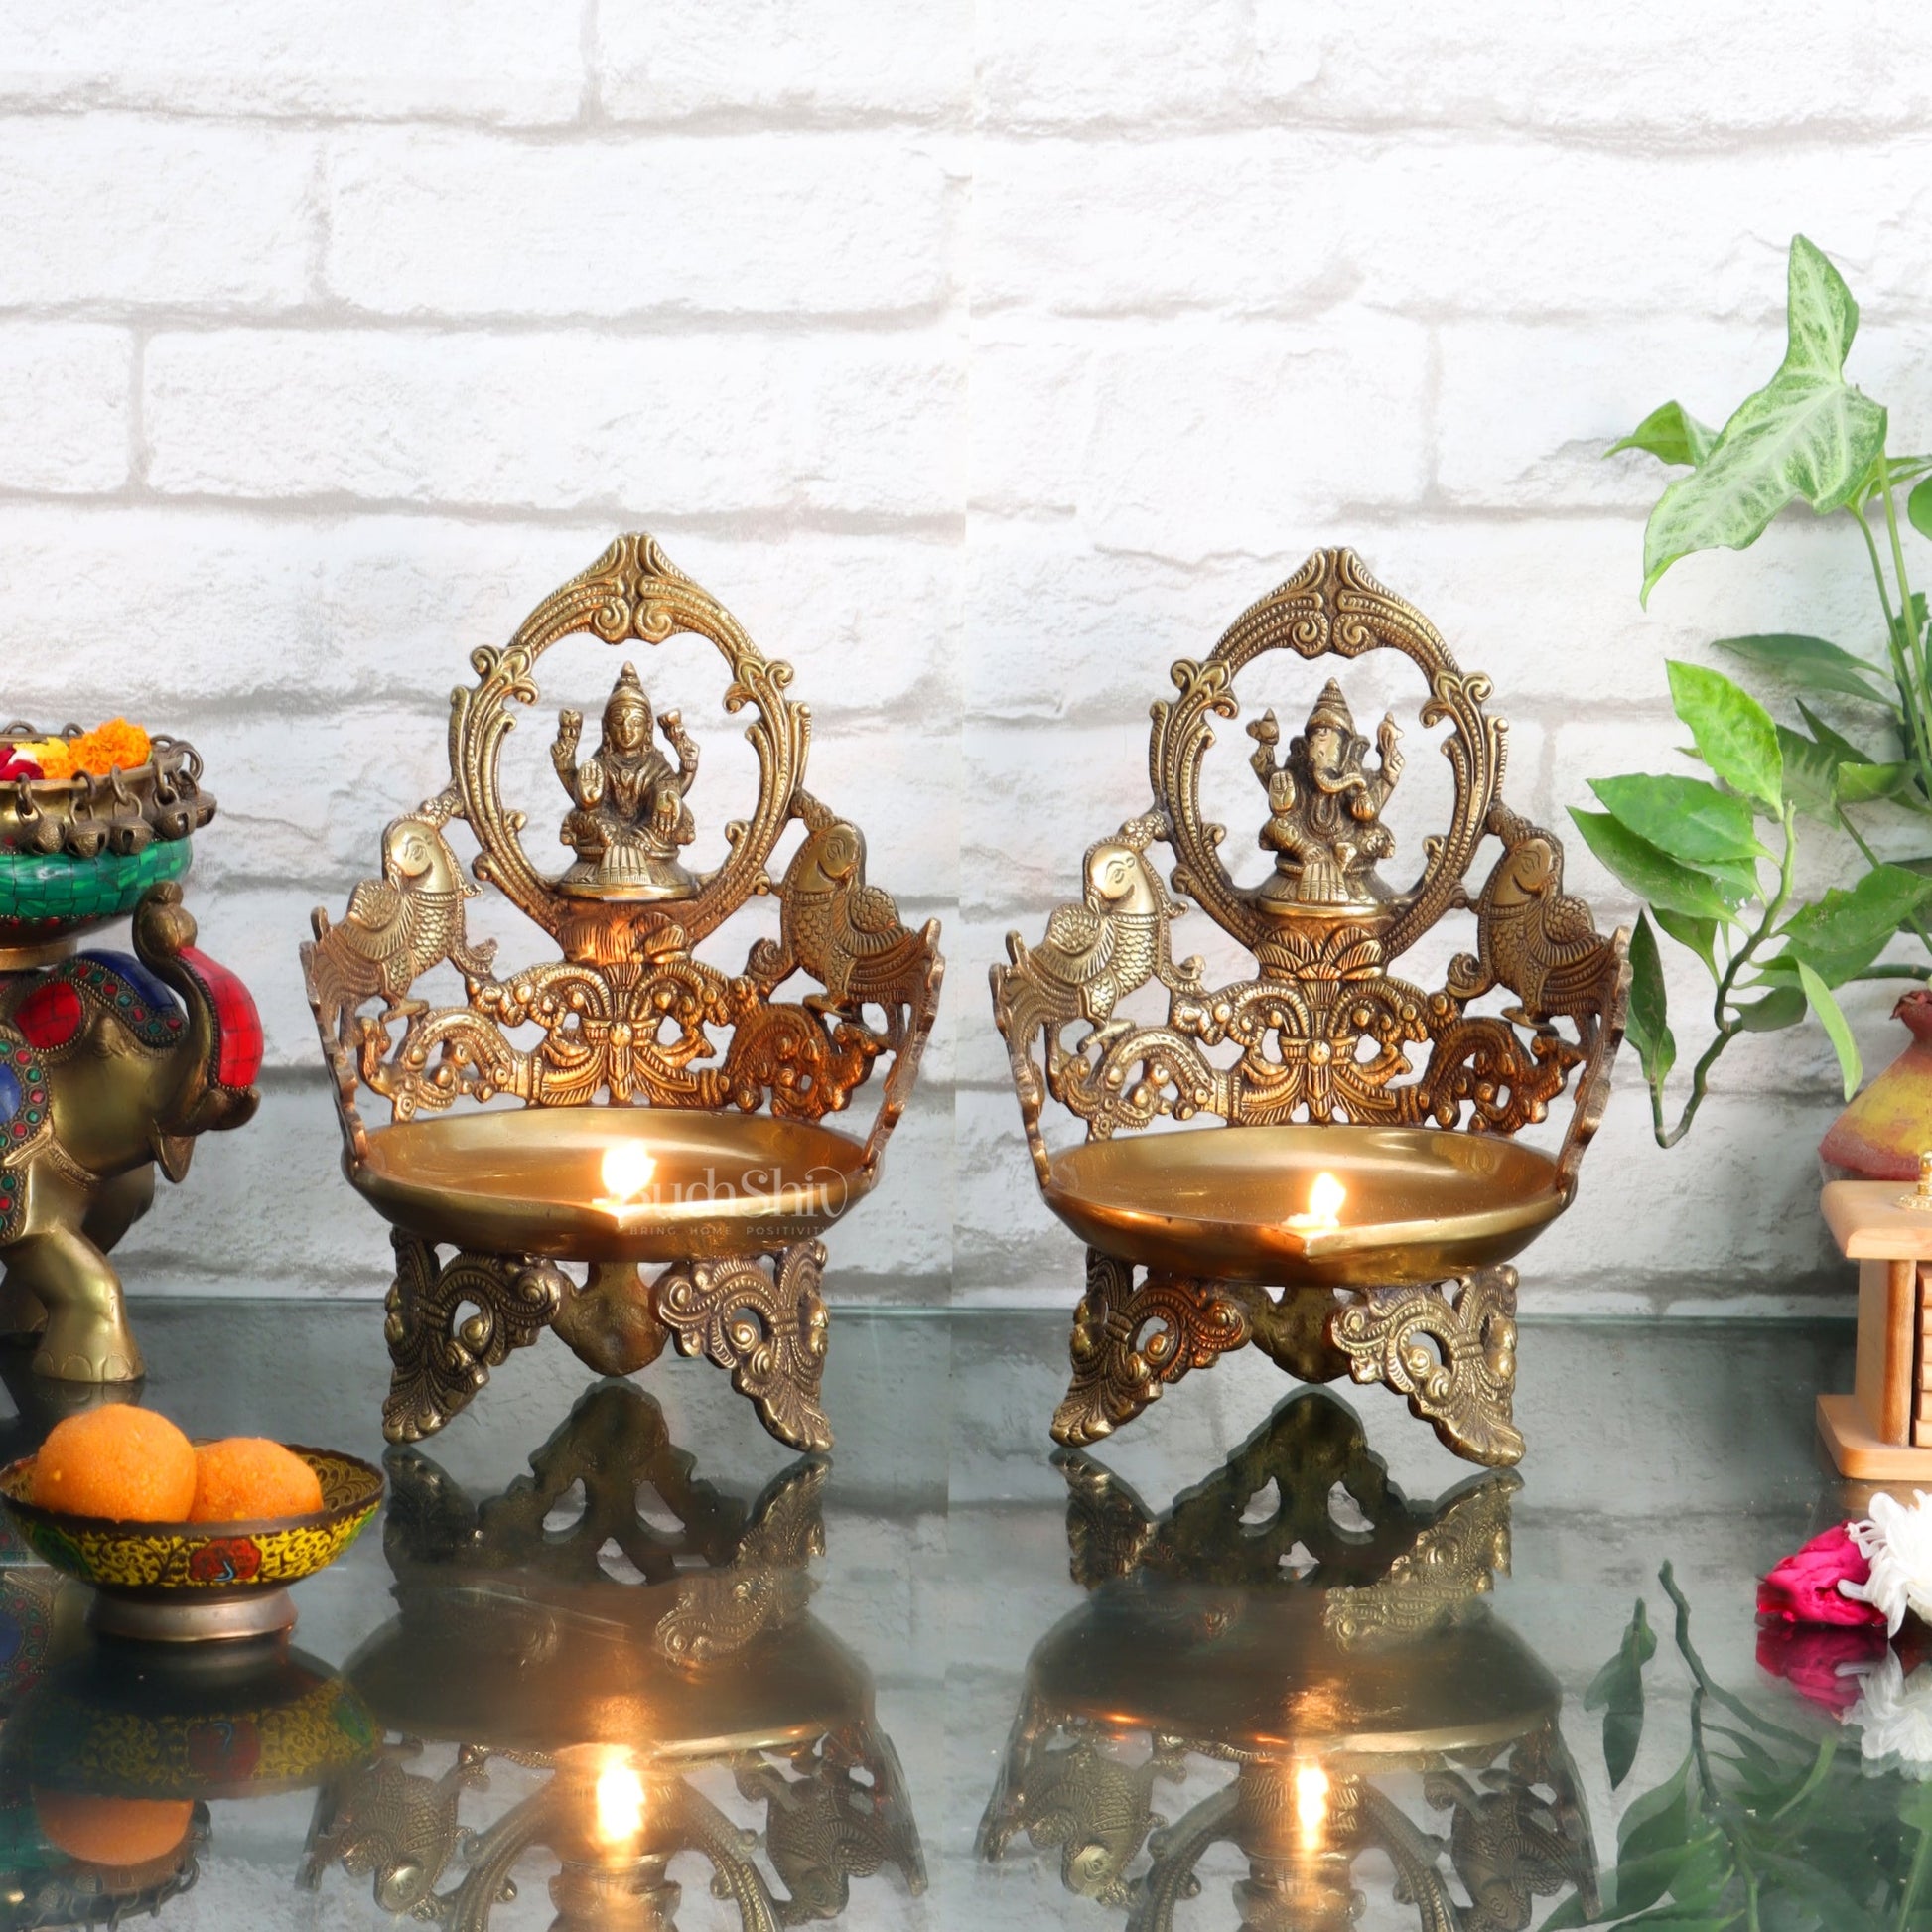 Ganesha and Lakshmi Brass Urli Lamp dull gold - Budhshiv.com